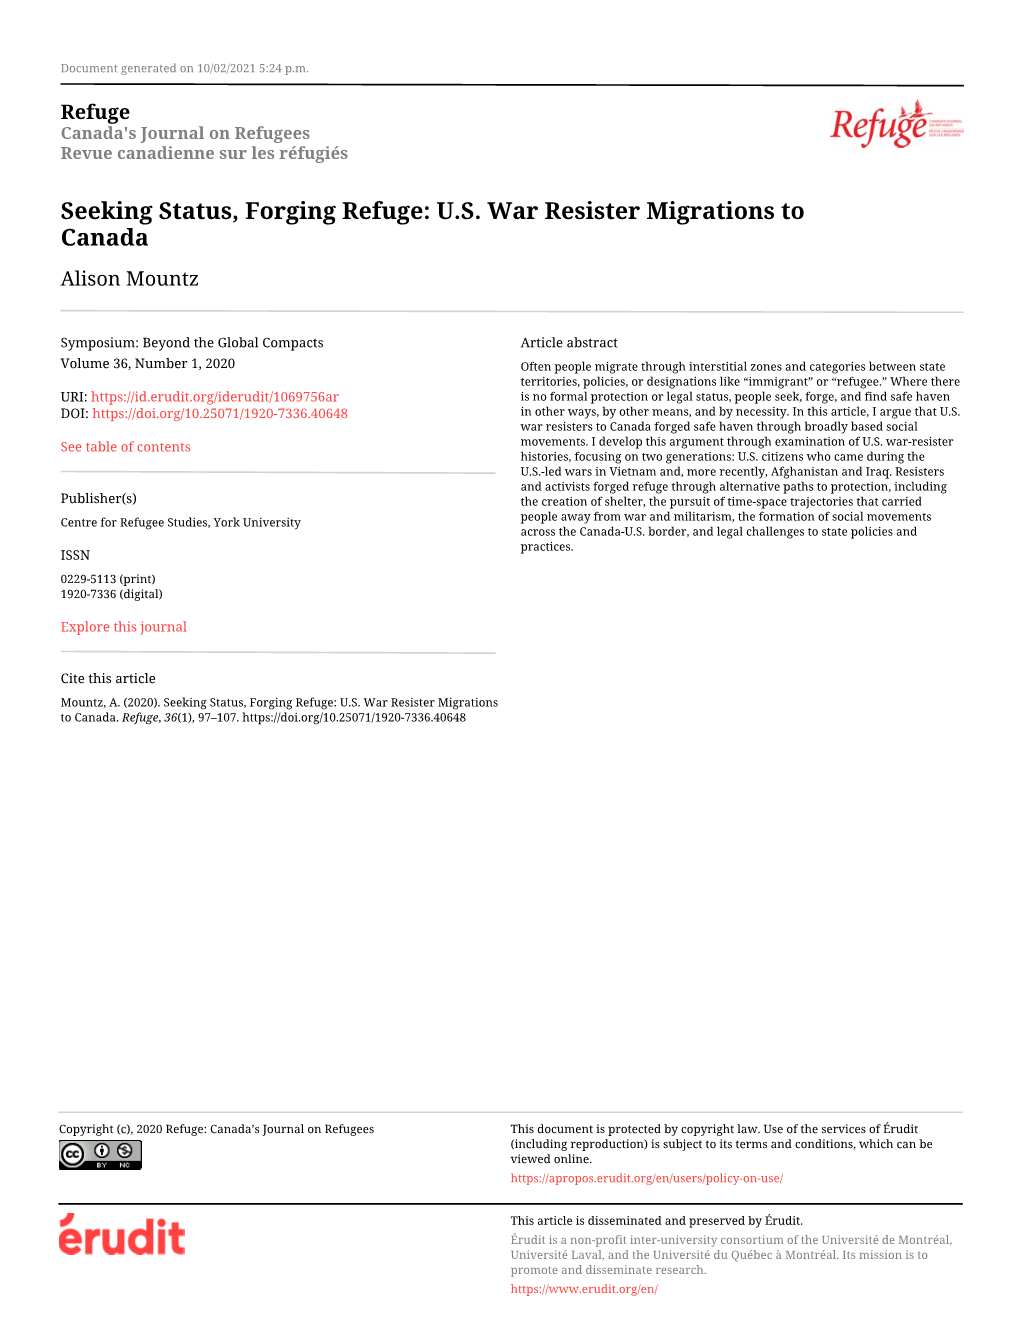 Seeking Status, Forging Refuge: U.S. War Resister Migrations to Canada Alison Mountz